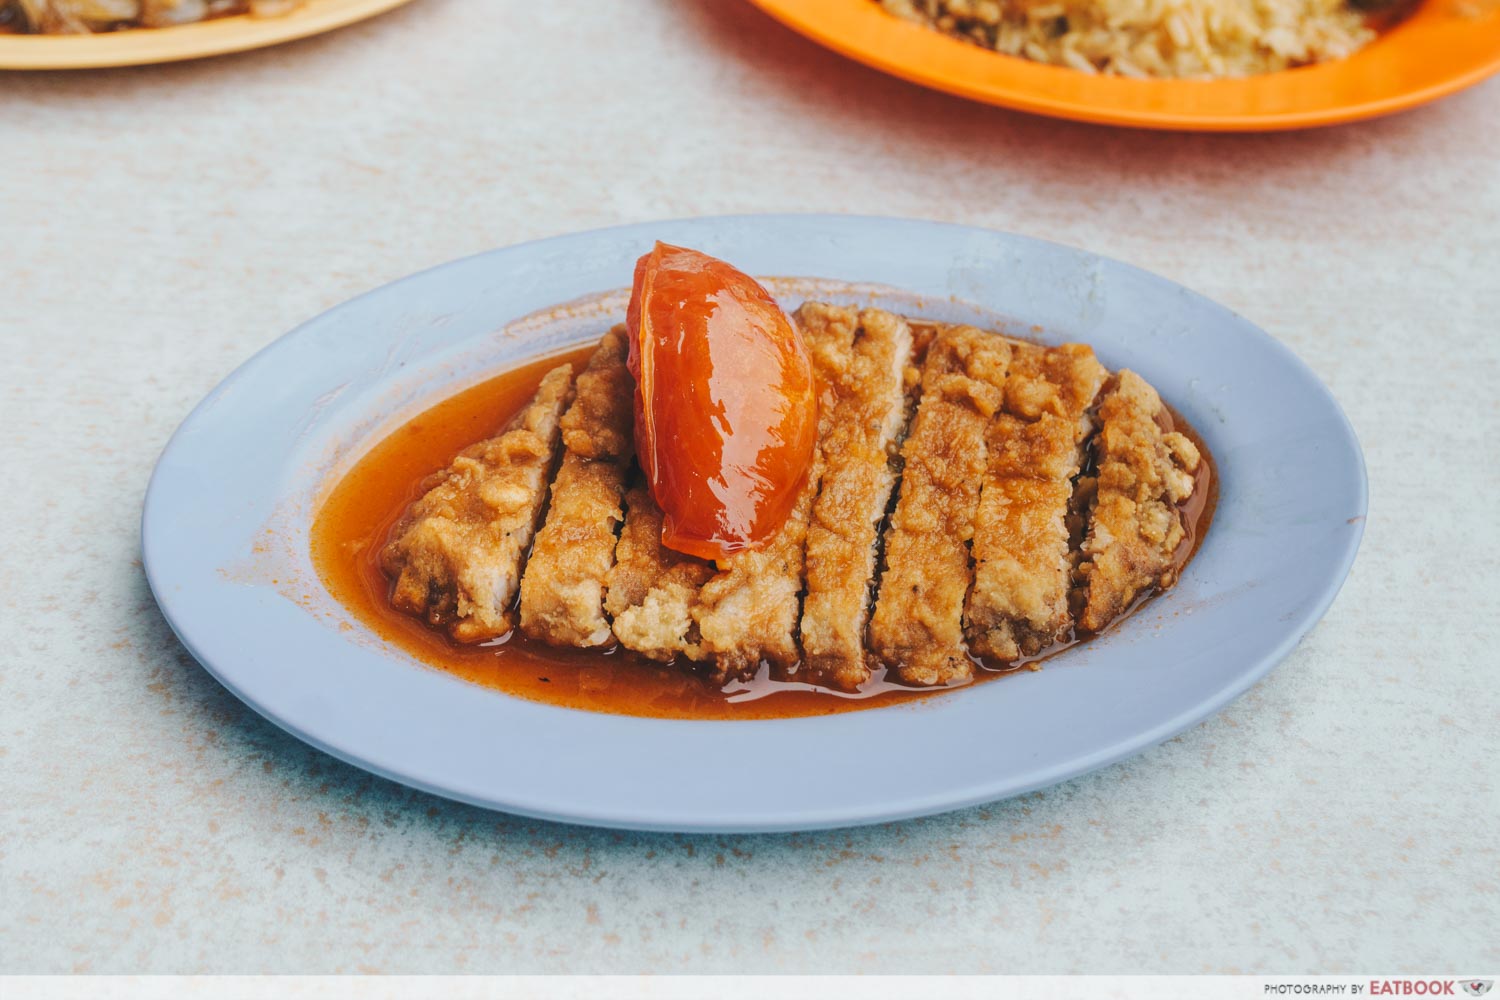 Loo's Hainanese Curry Rice - Pork chop intro shot